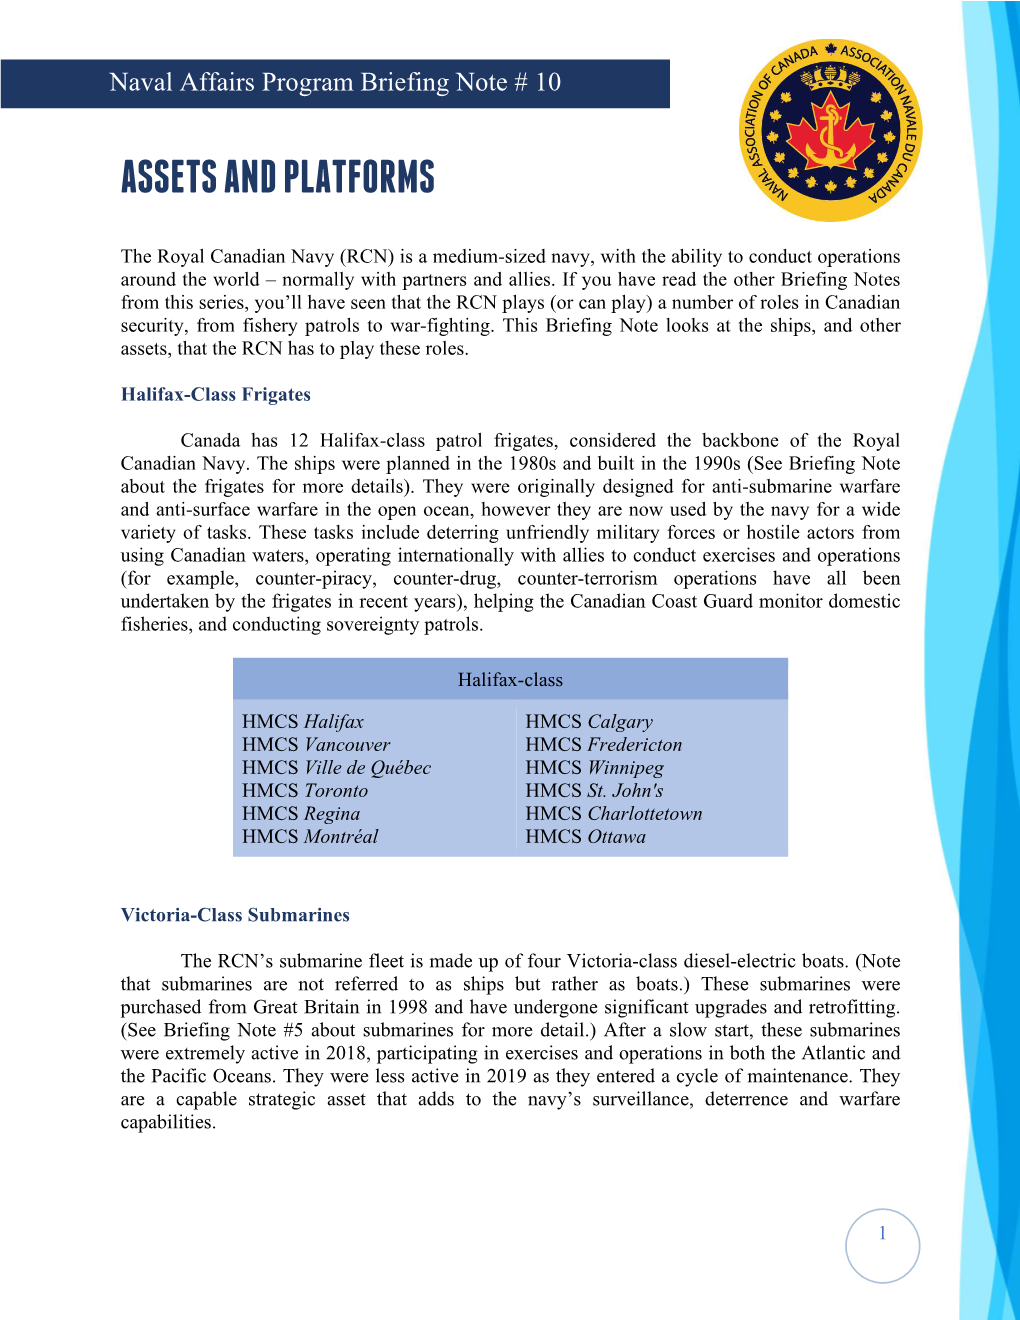 Assets and Platforms